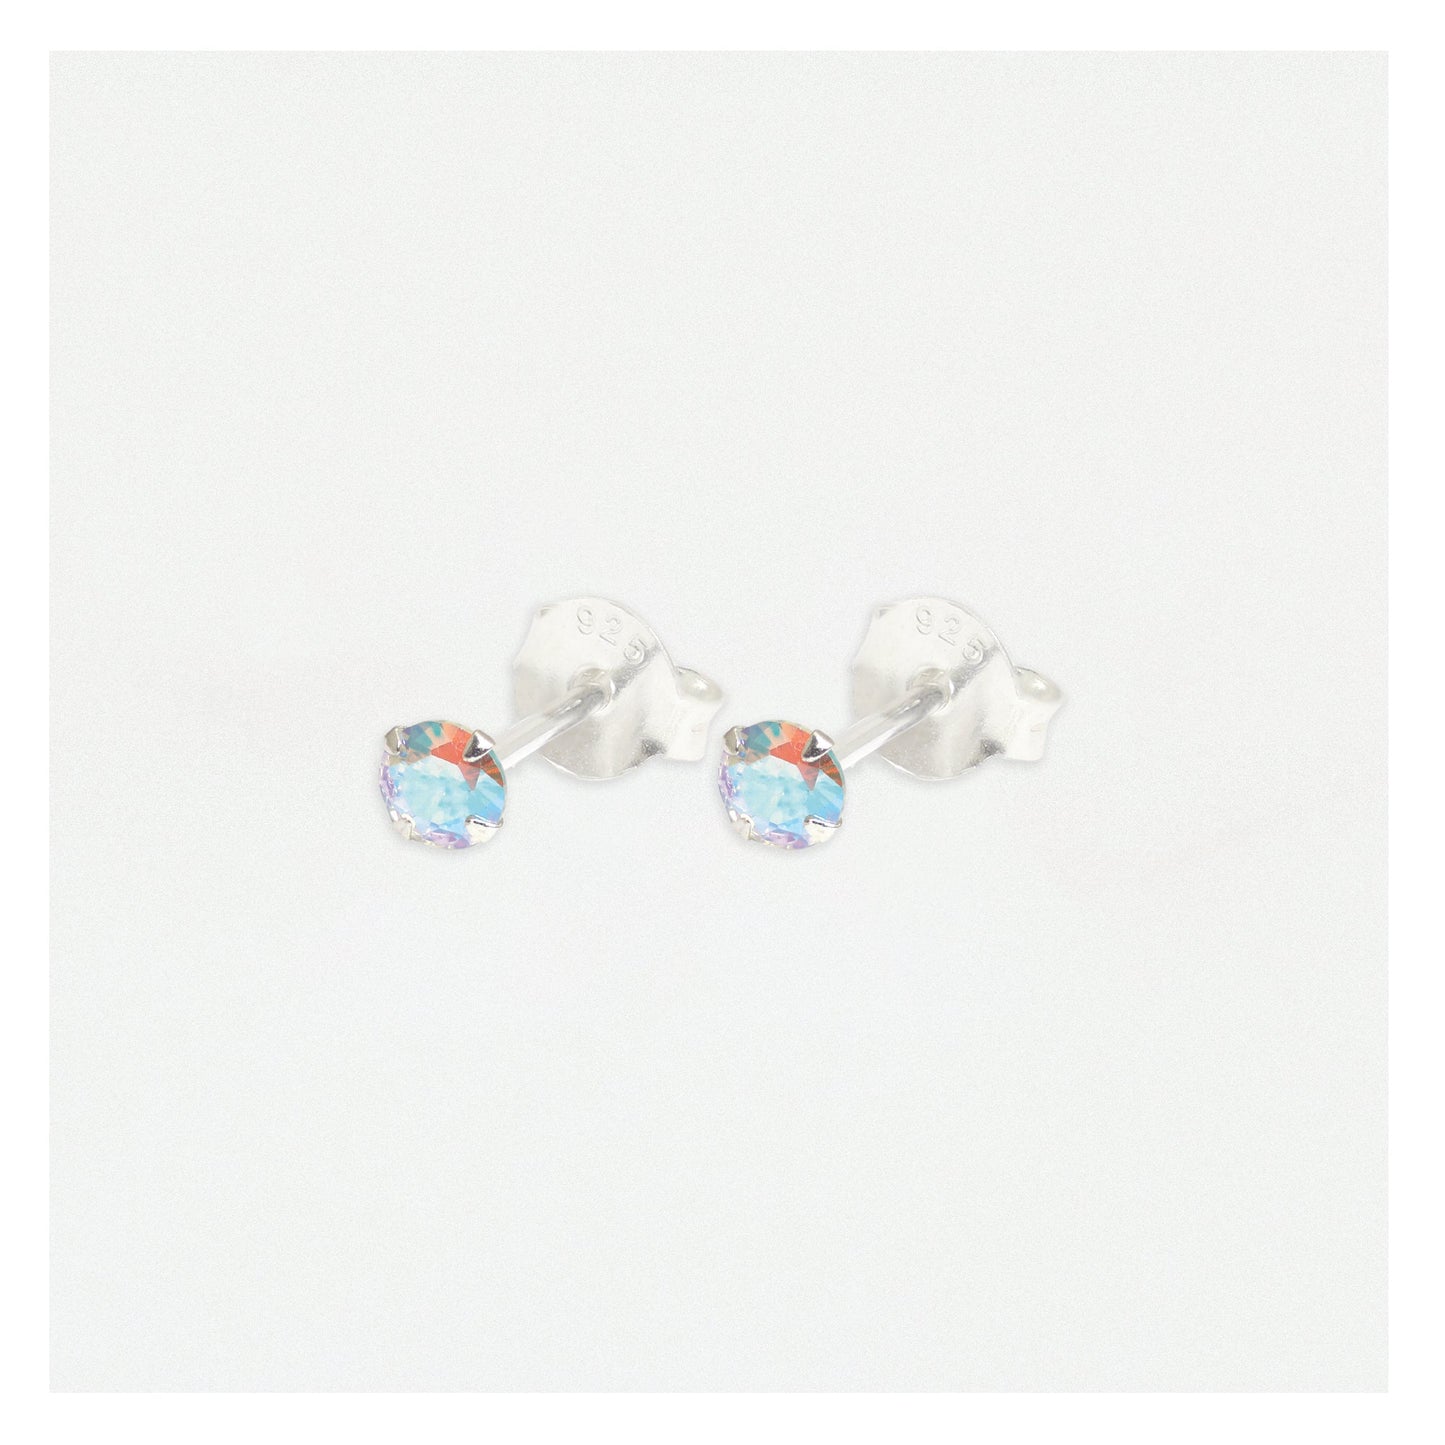 Boxed Blank Rainbow Earring Card Earrings Crumble and Core   